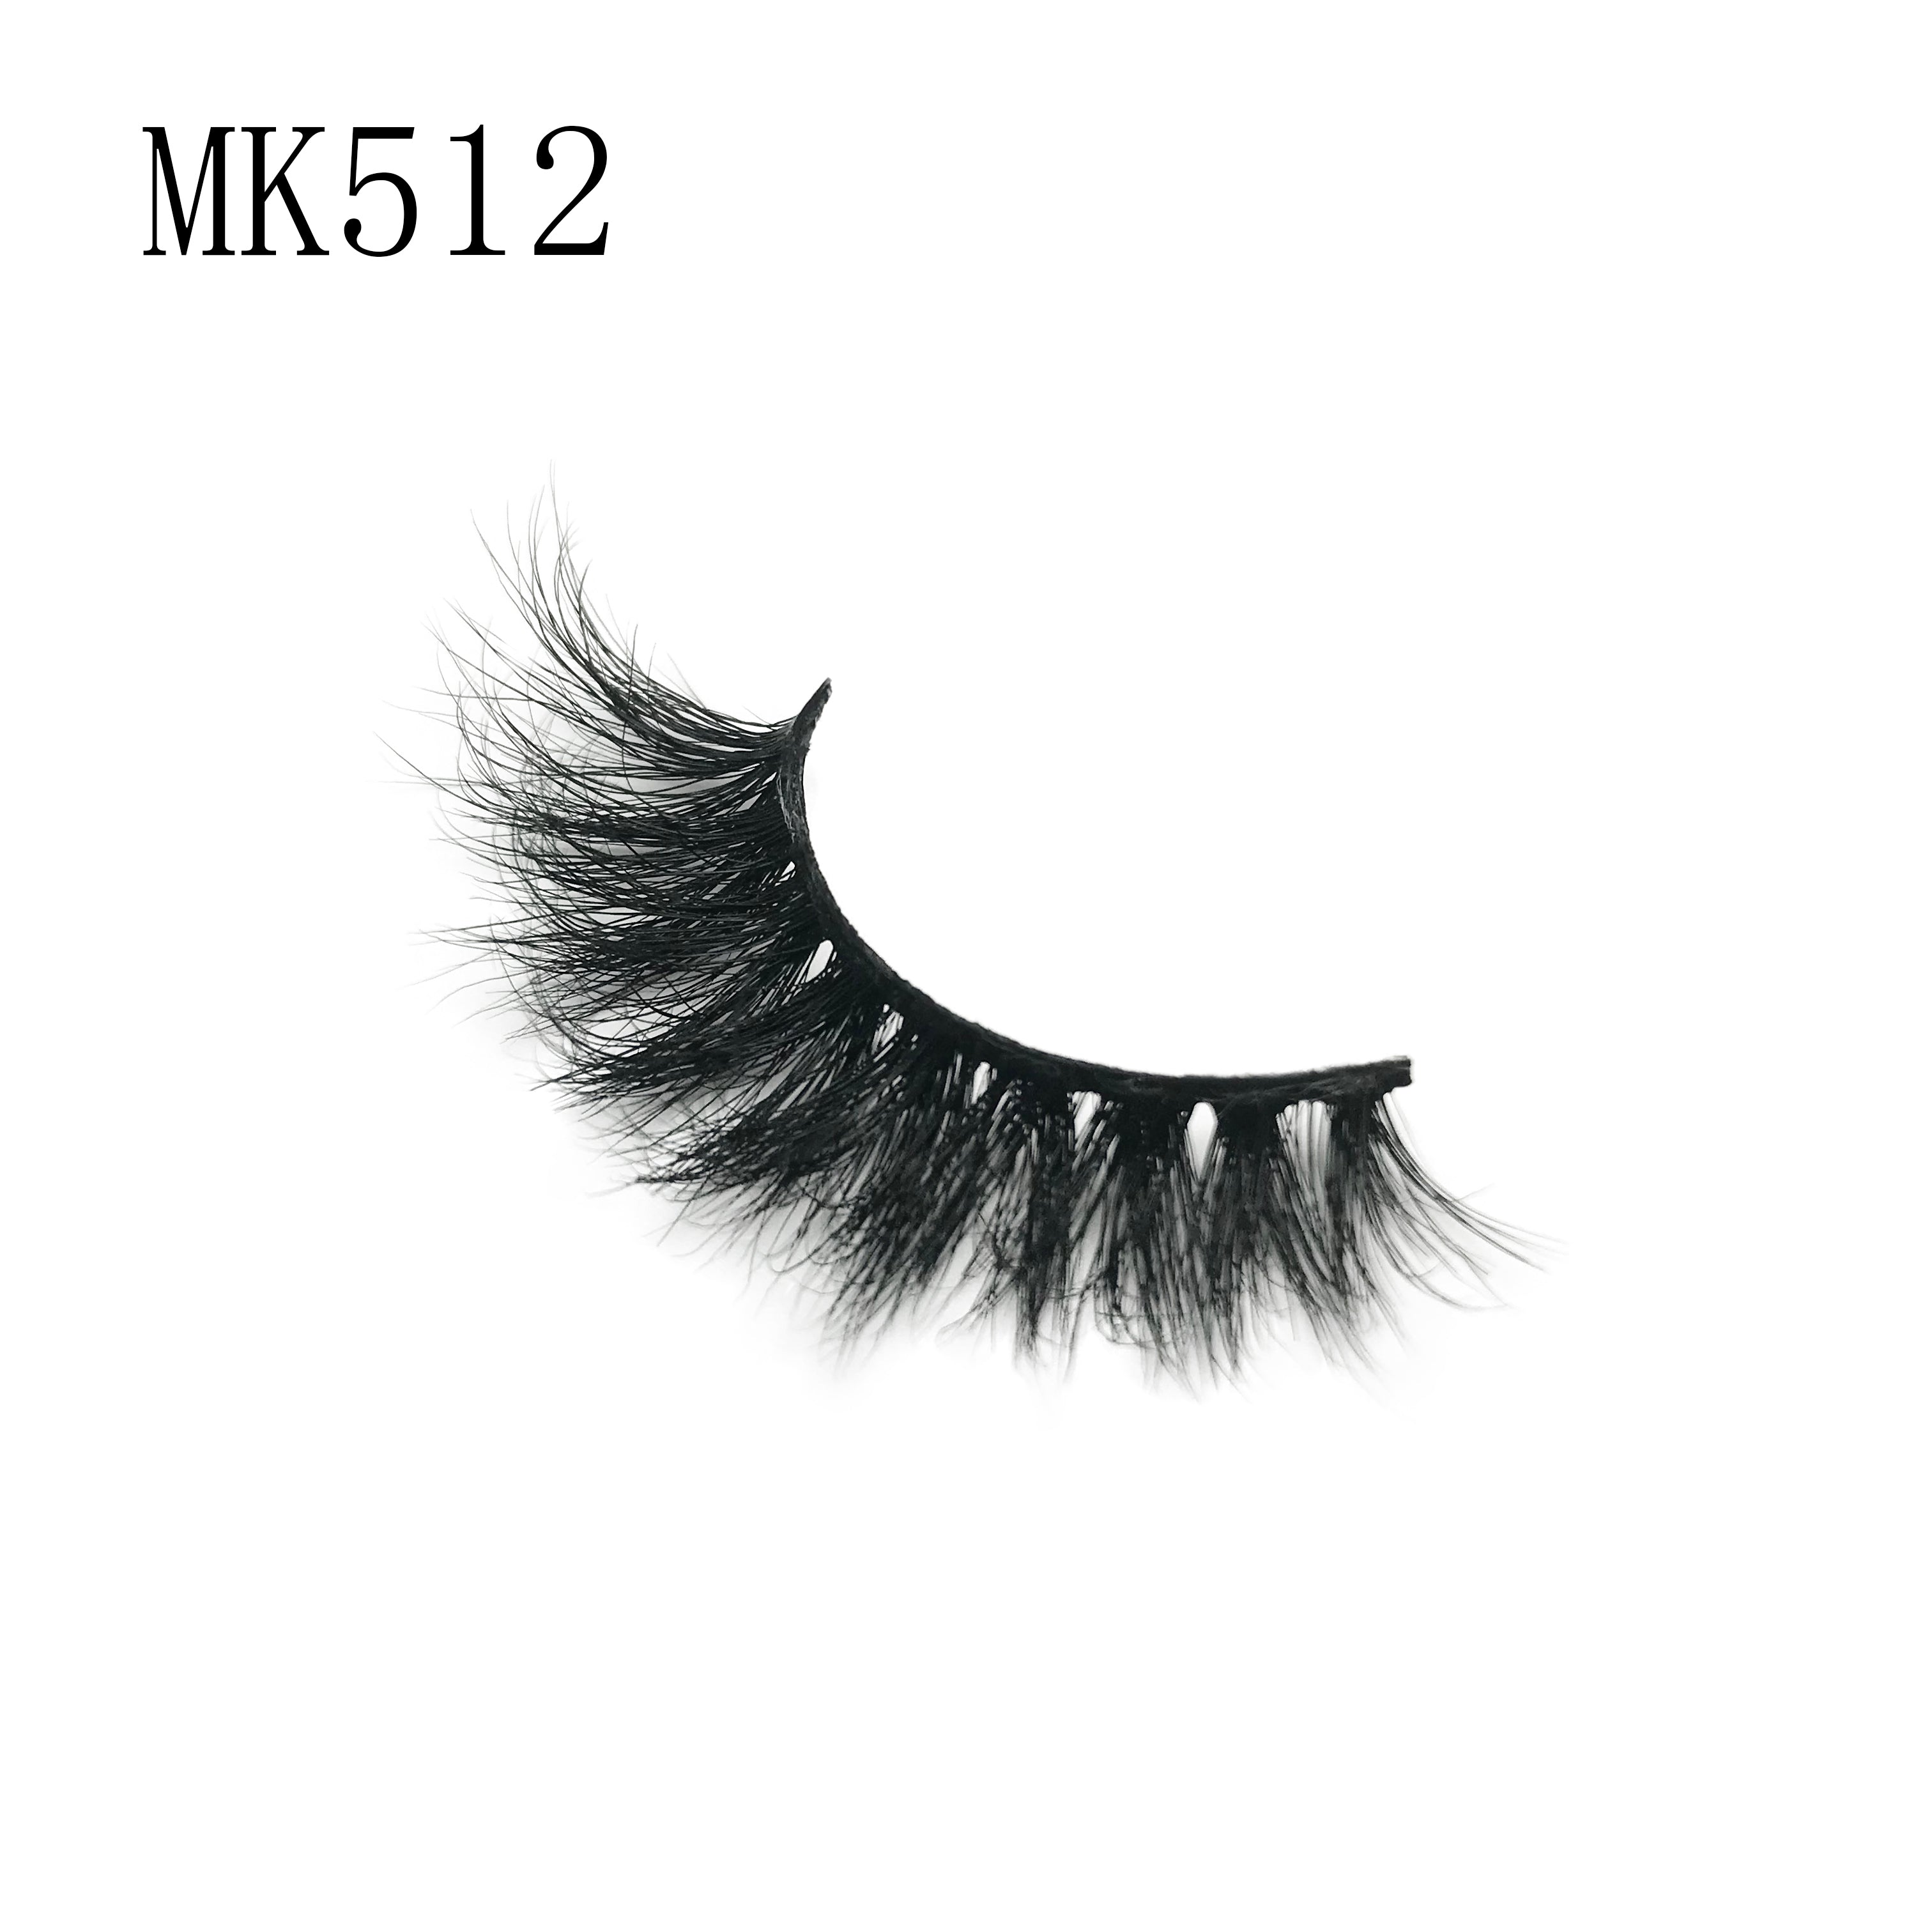 3D Mink Lashes - MK512